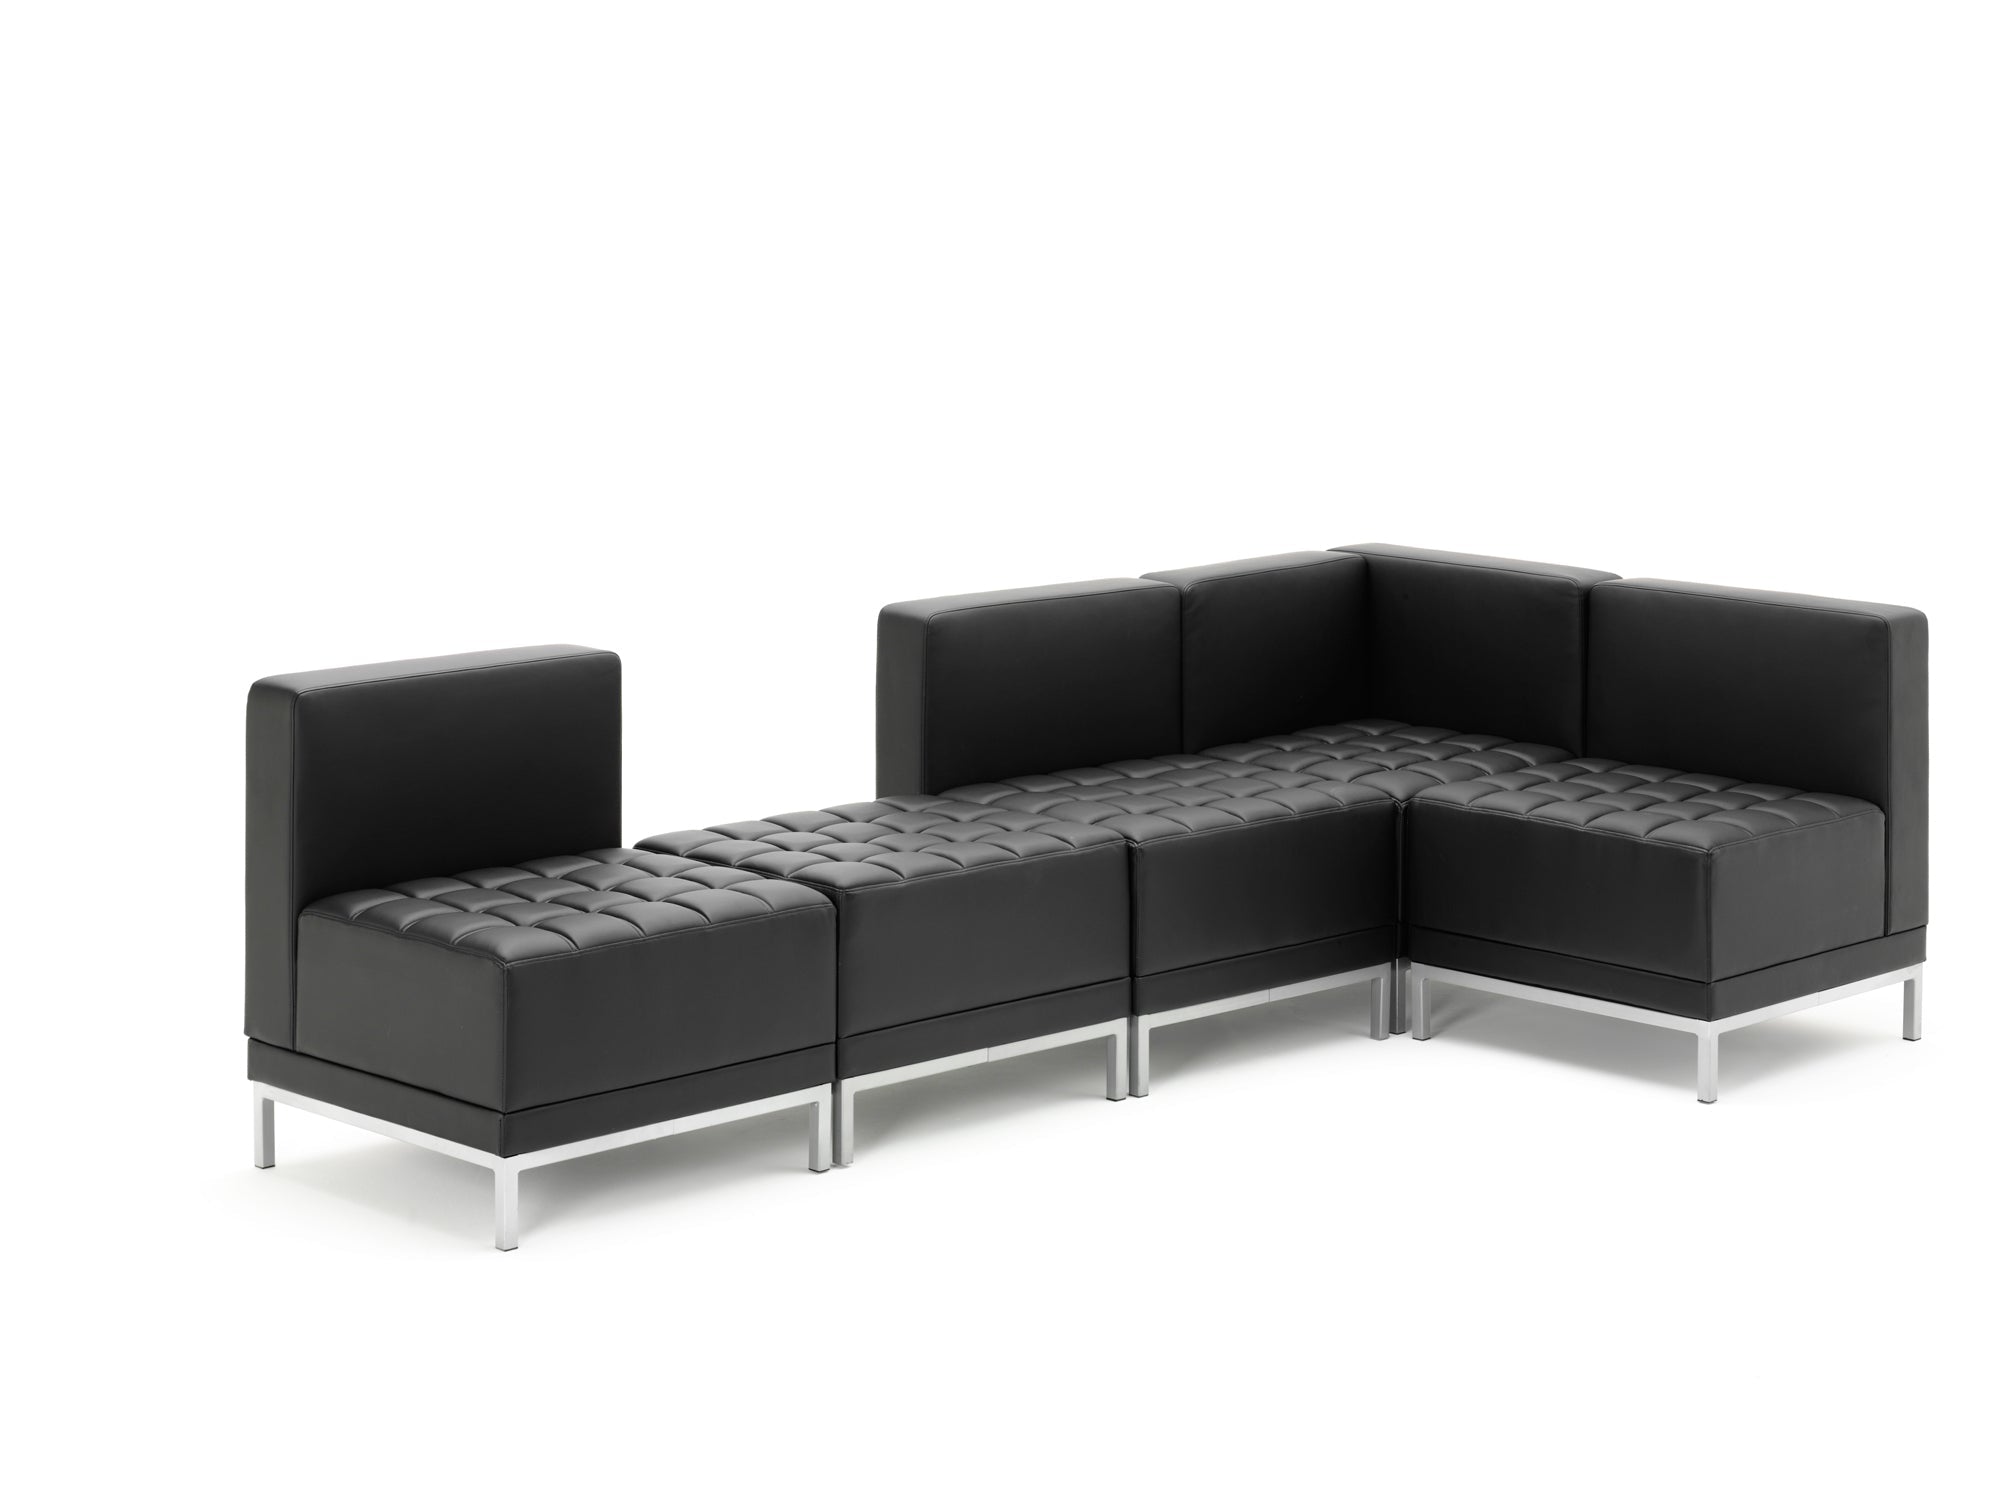 Infinity Modular Corner Unit Sofa Chair